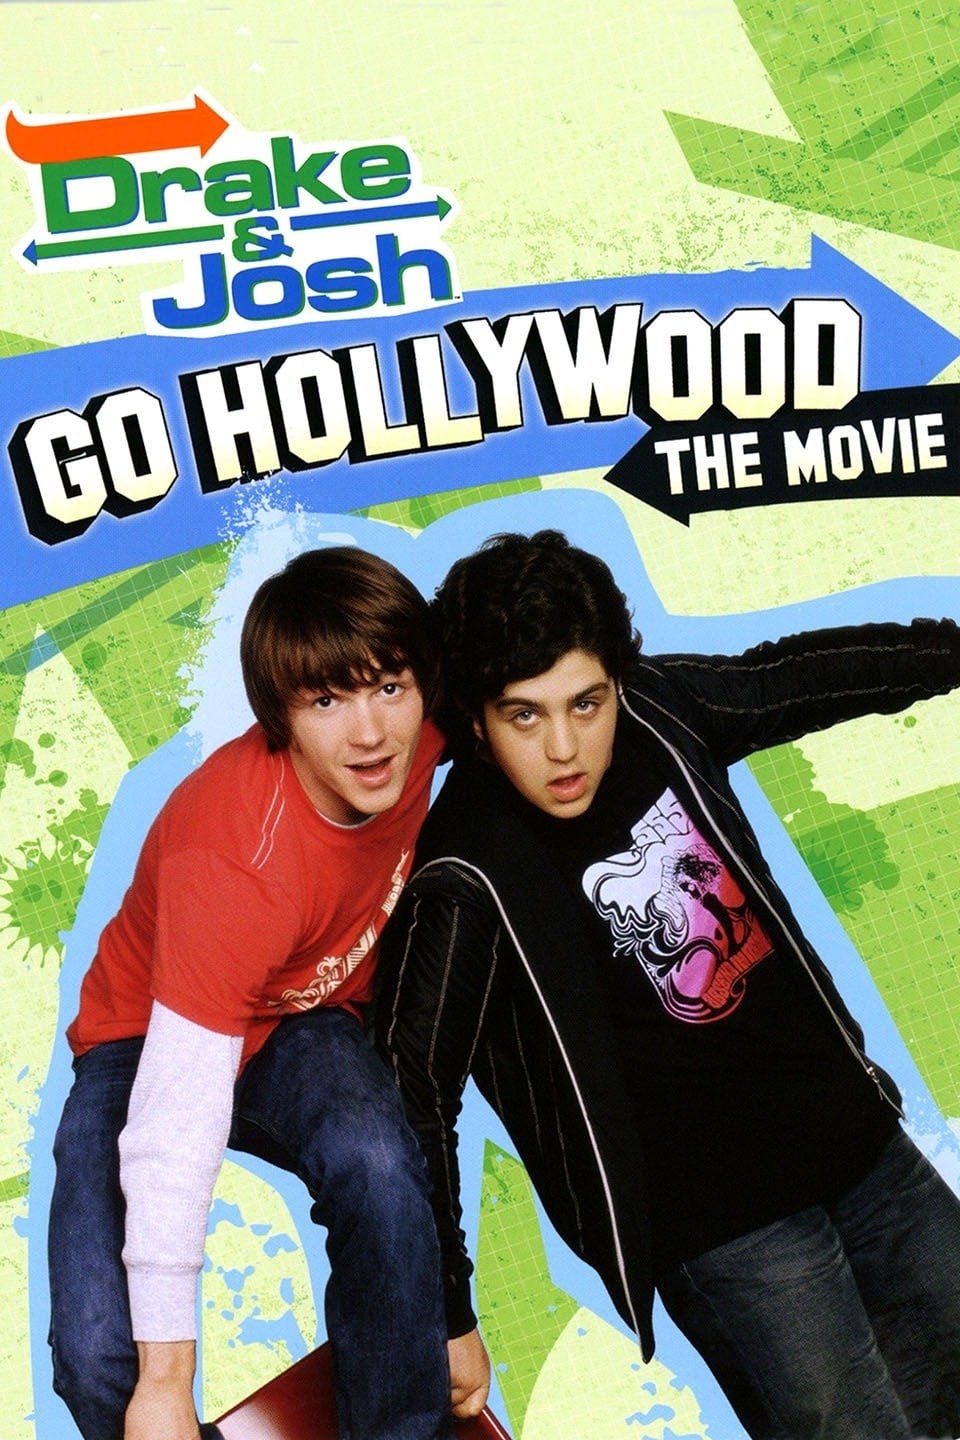 Drake et Josh à Hollywood